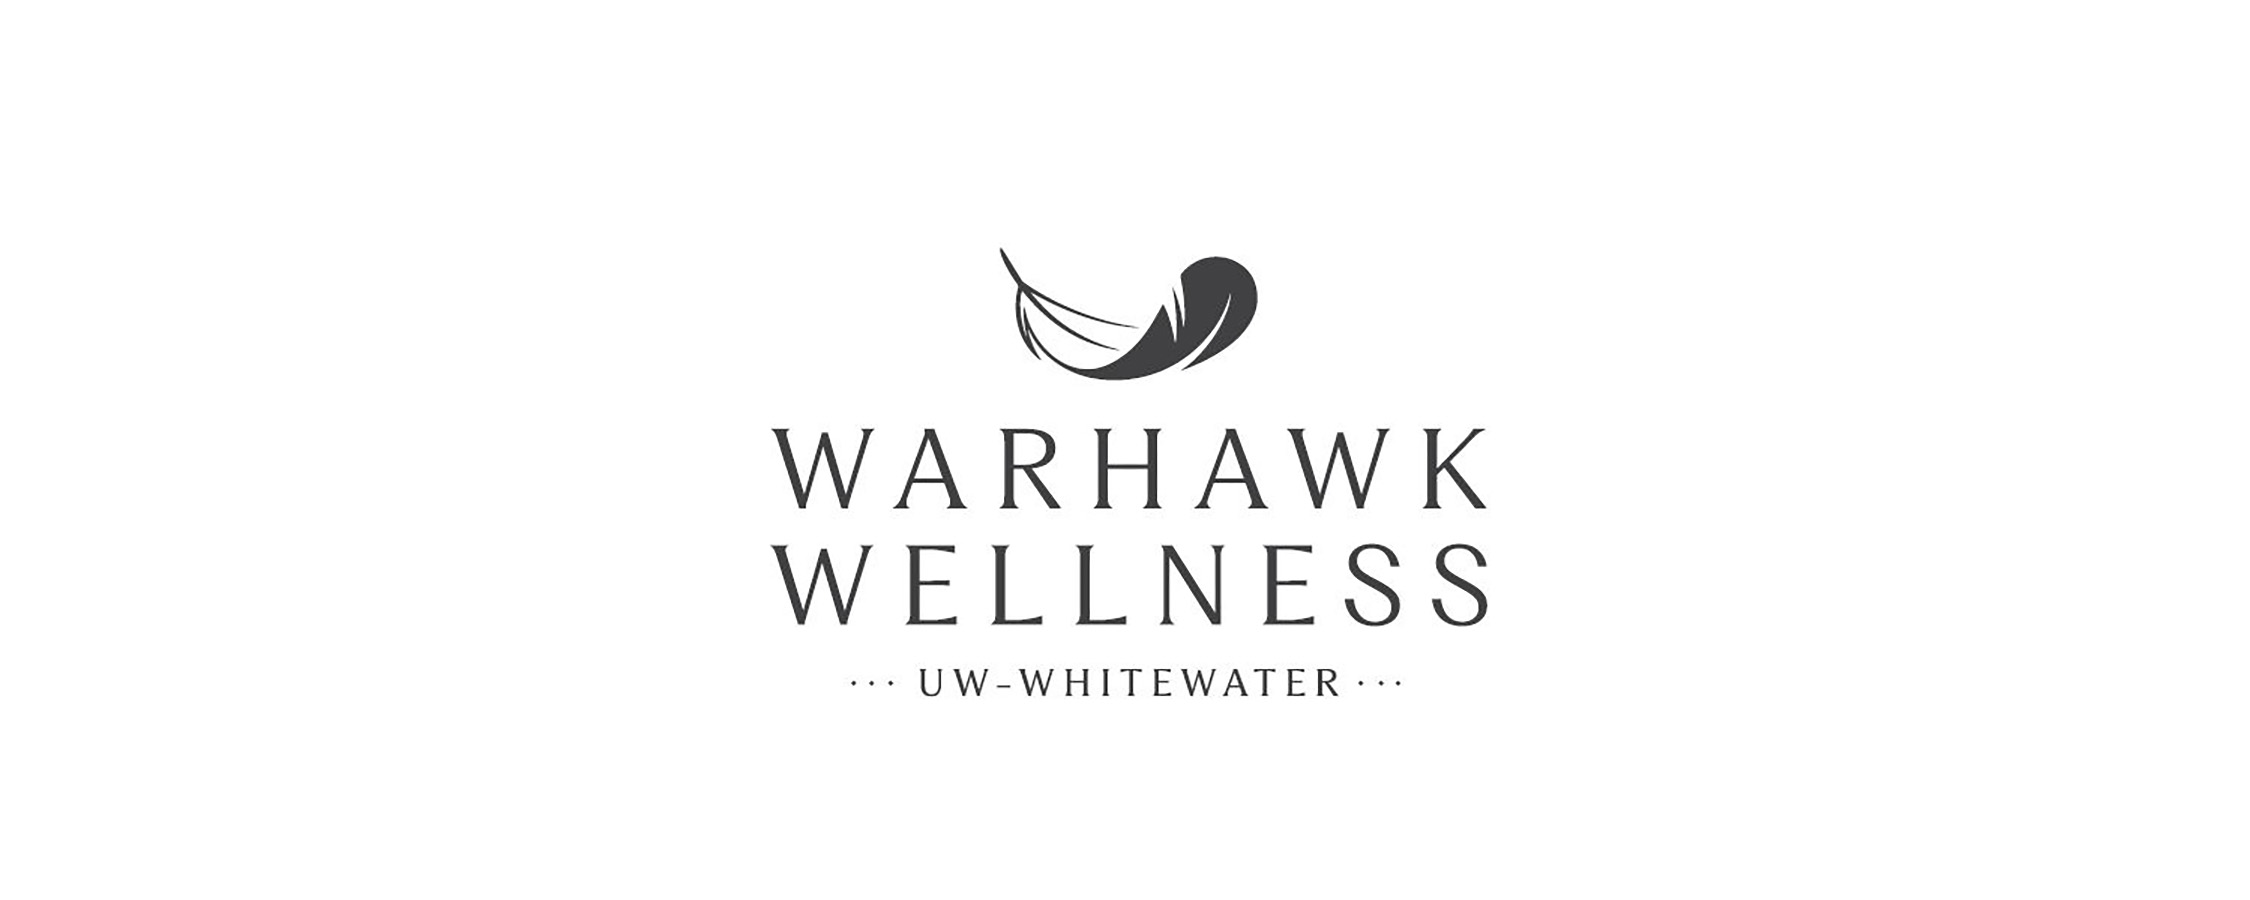 Worksite wellness feather logo